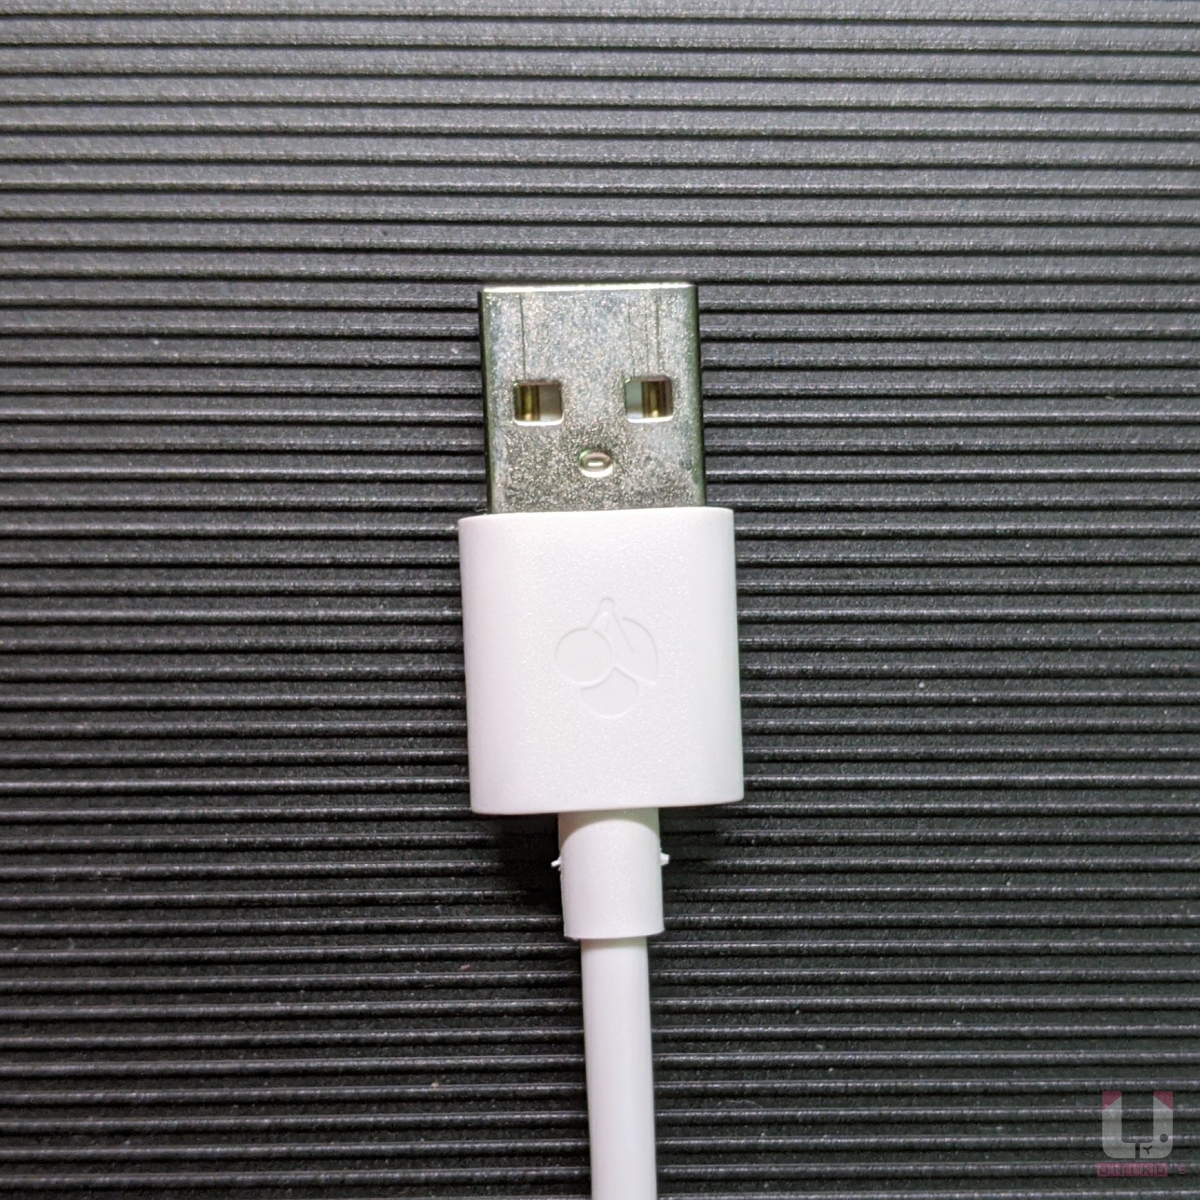 USB 端有刻 CHERRY 的櫻桃式樣 LOGO。